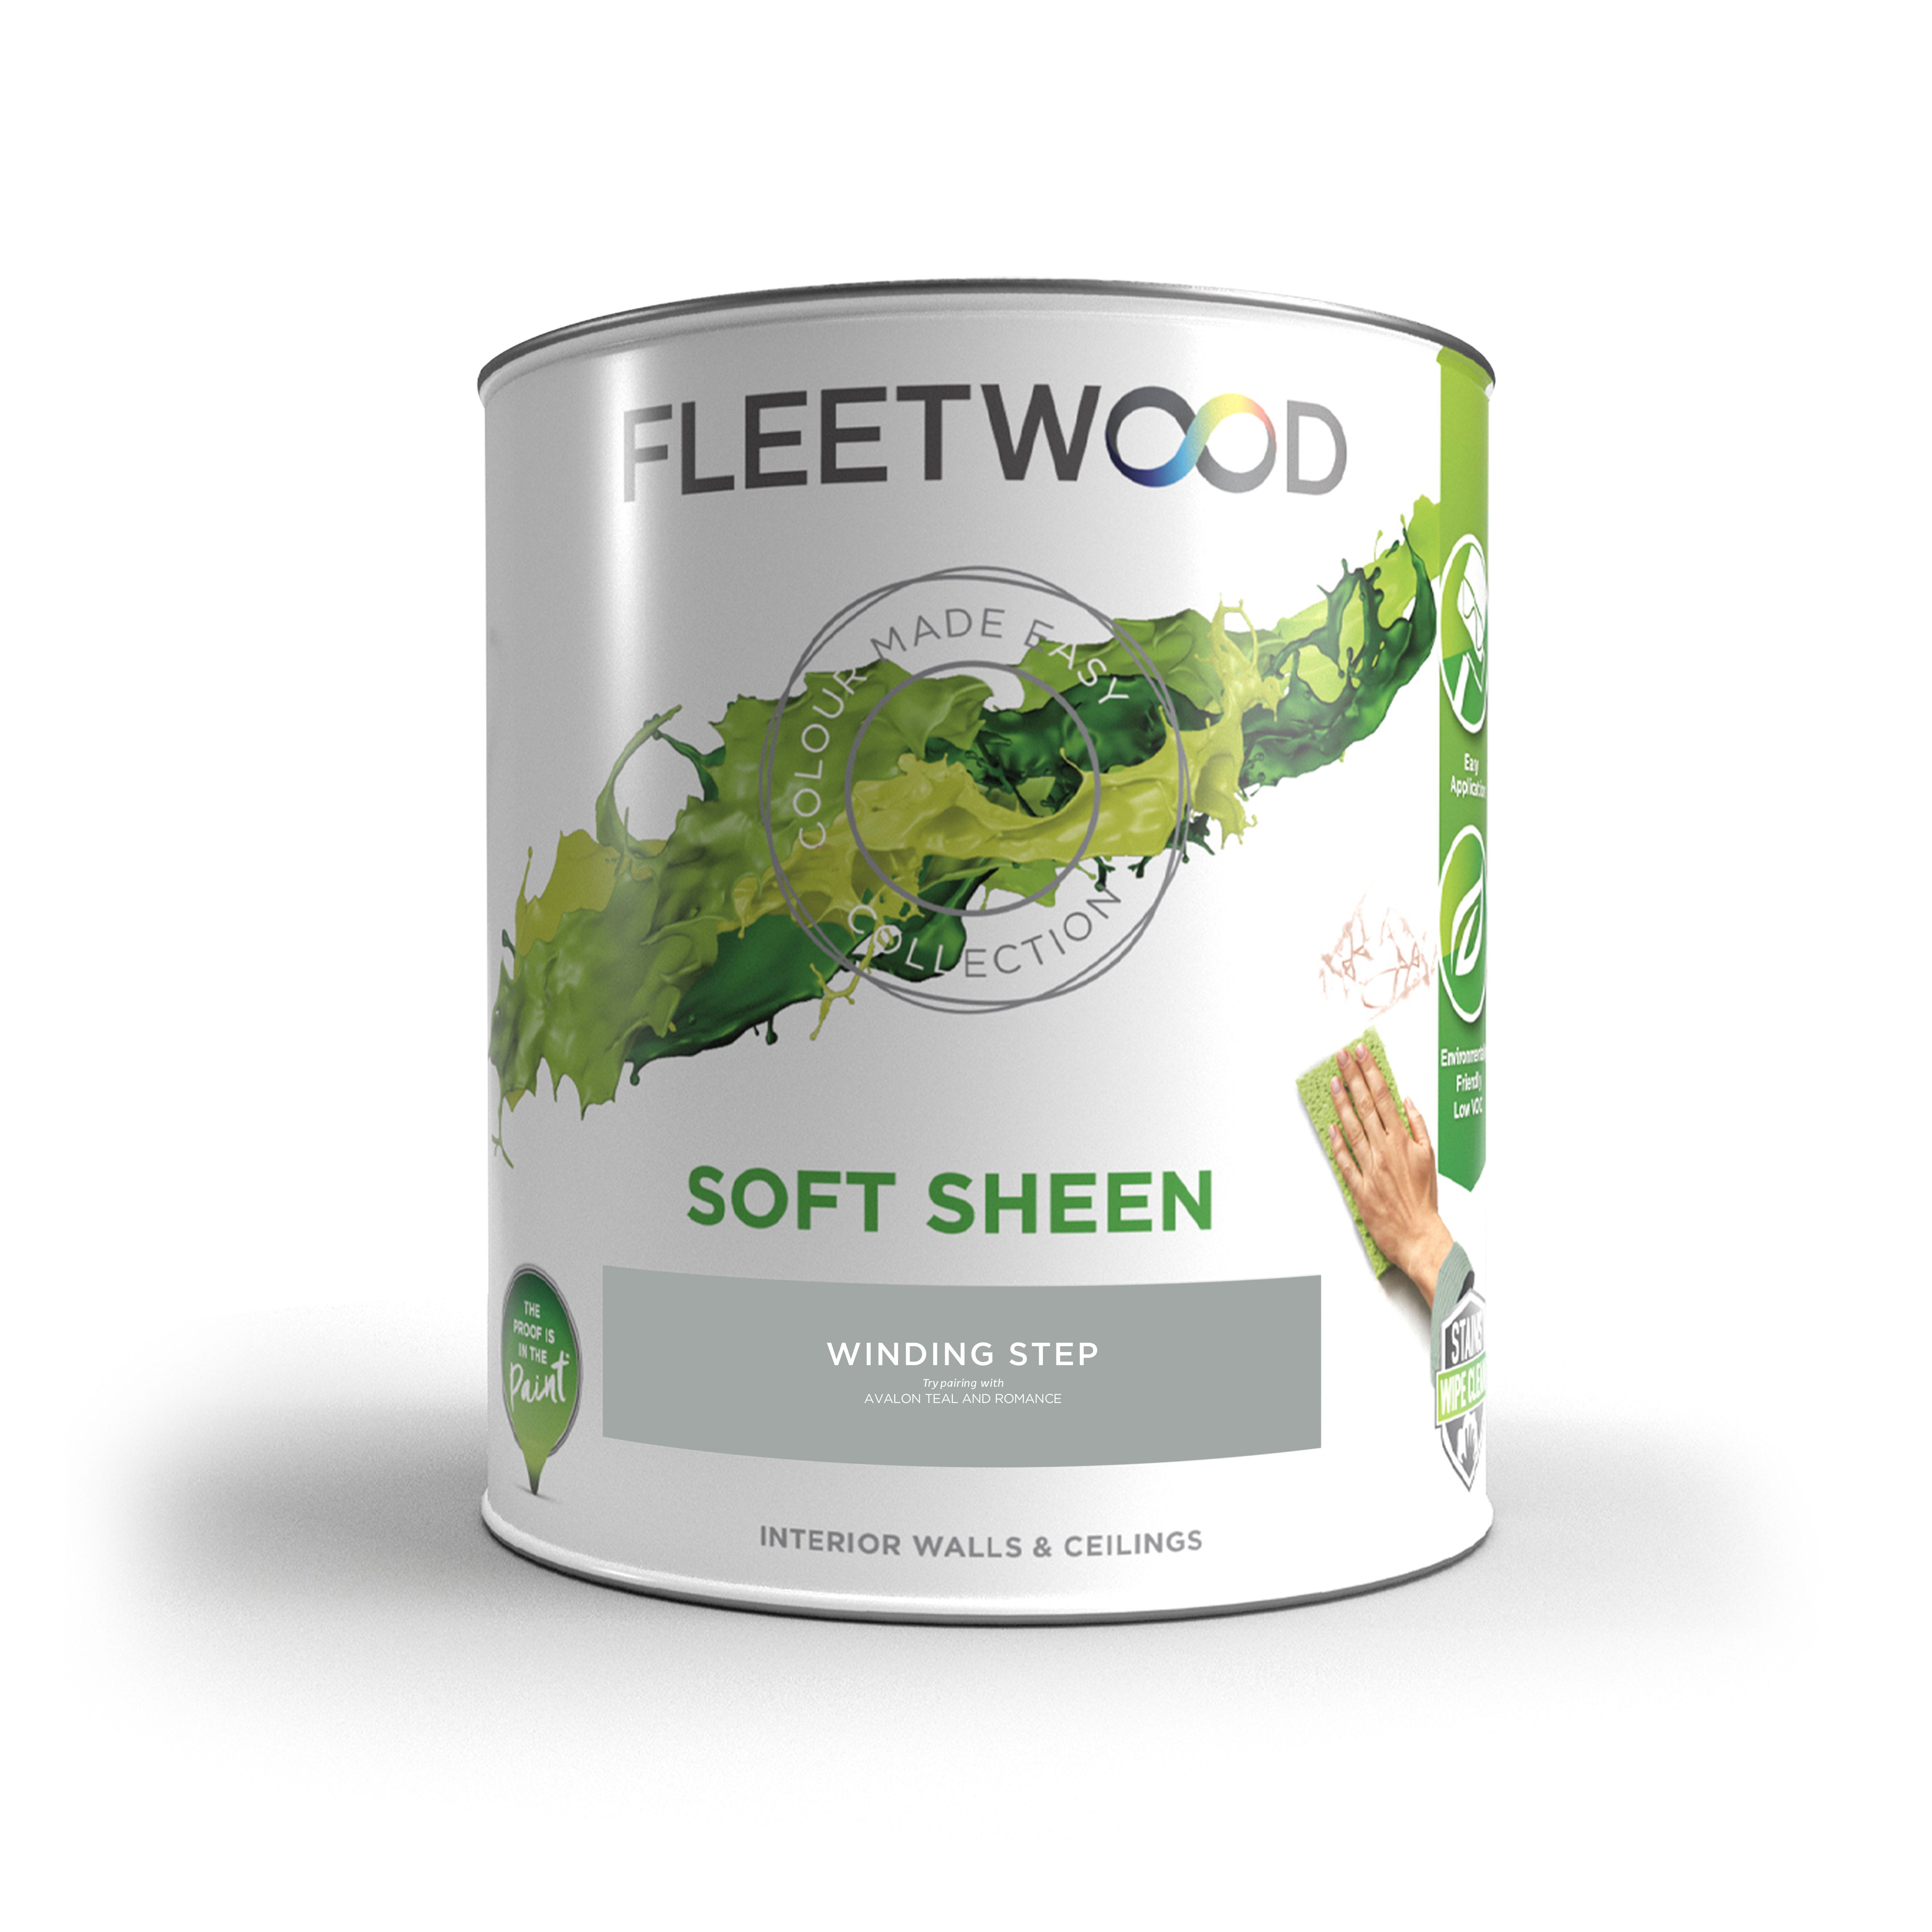 Fleetwood Winding Step Soft sheen Emulsion paint, 5L